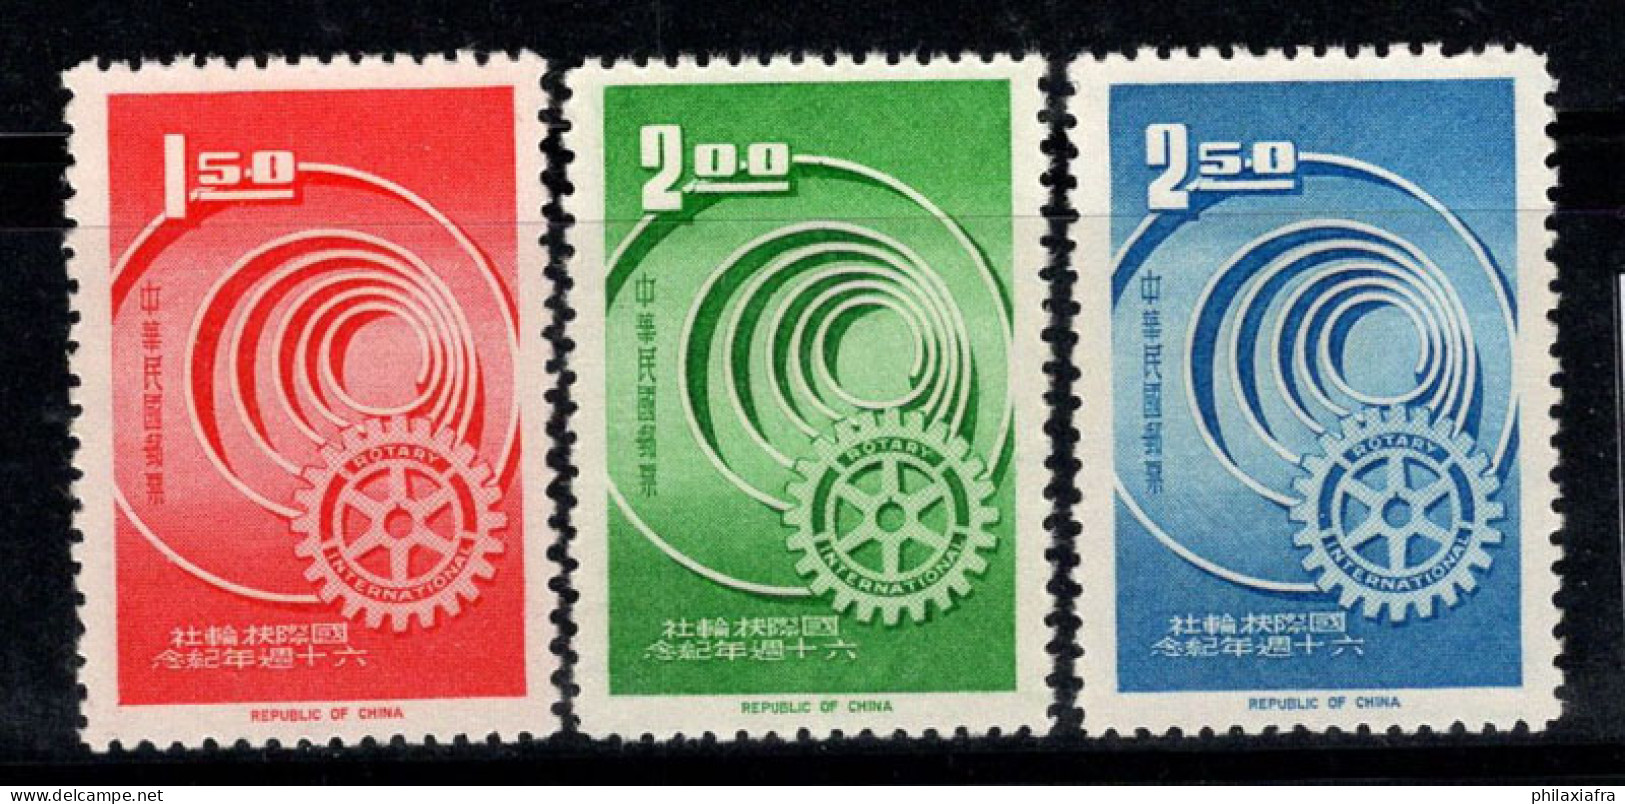 Taiwan 1966 Mi. 560-562 Sans Gomme 100% Rotary International - Neufs